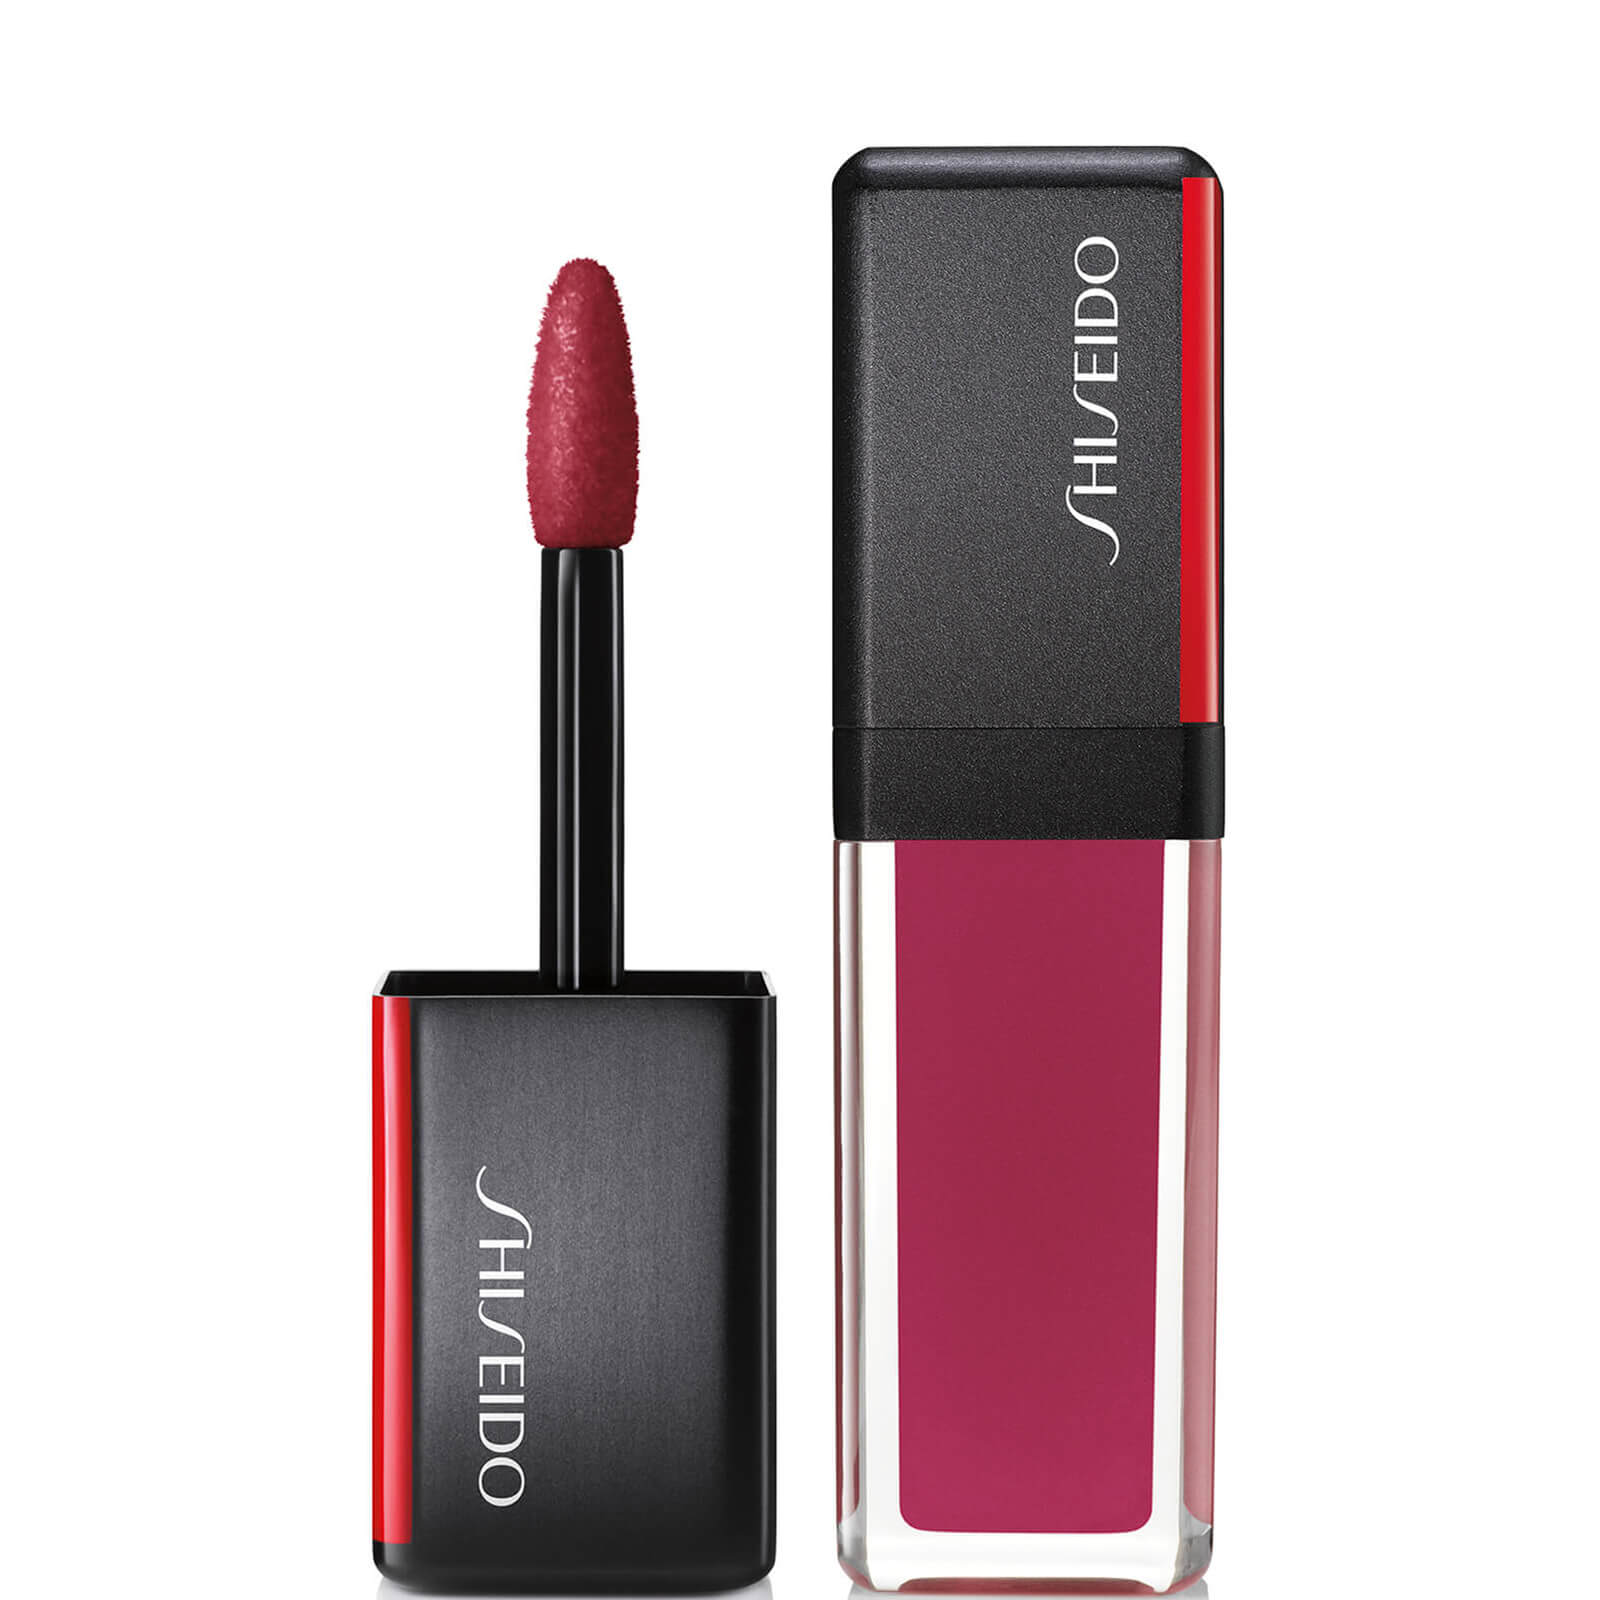 Shiseido LacquerInk LipShine (flere nyanser) - Optic Rose 309